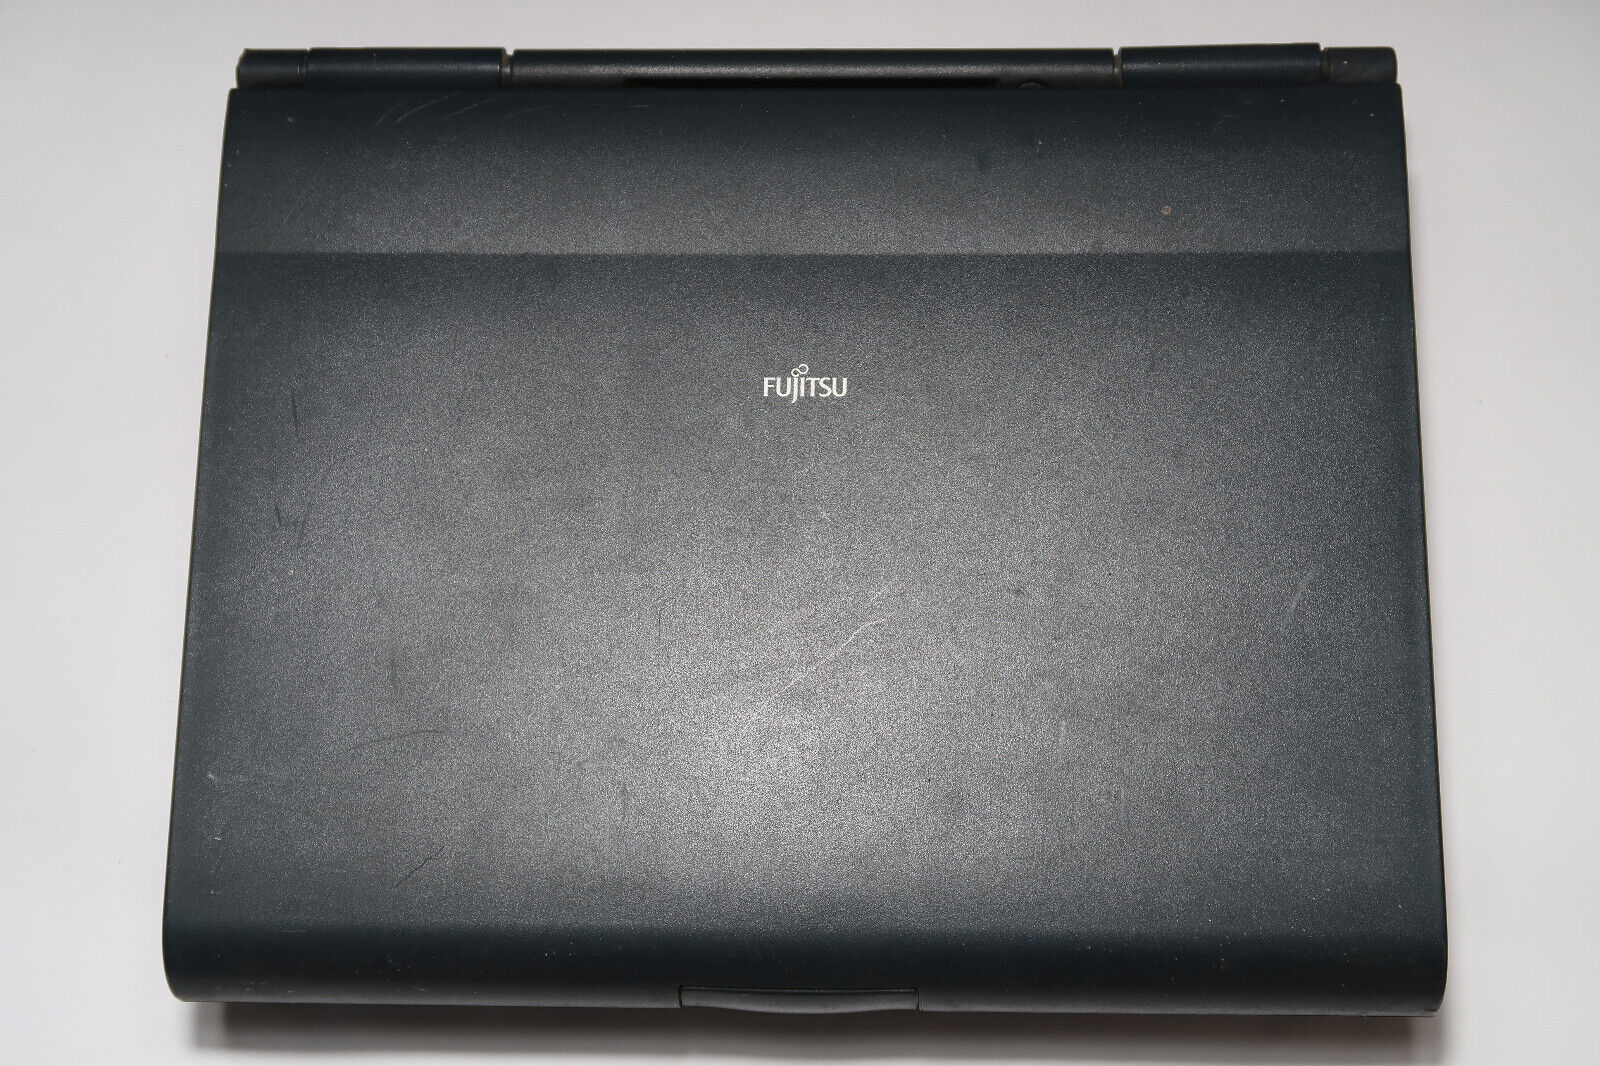 Fujitsu Lifebook 735DX Vintage Windows Laptop (Powers On)